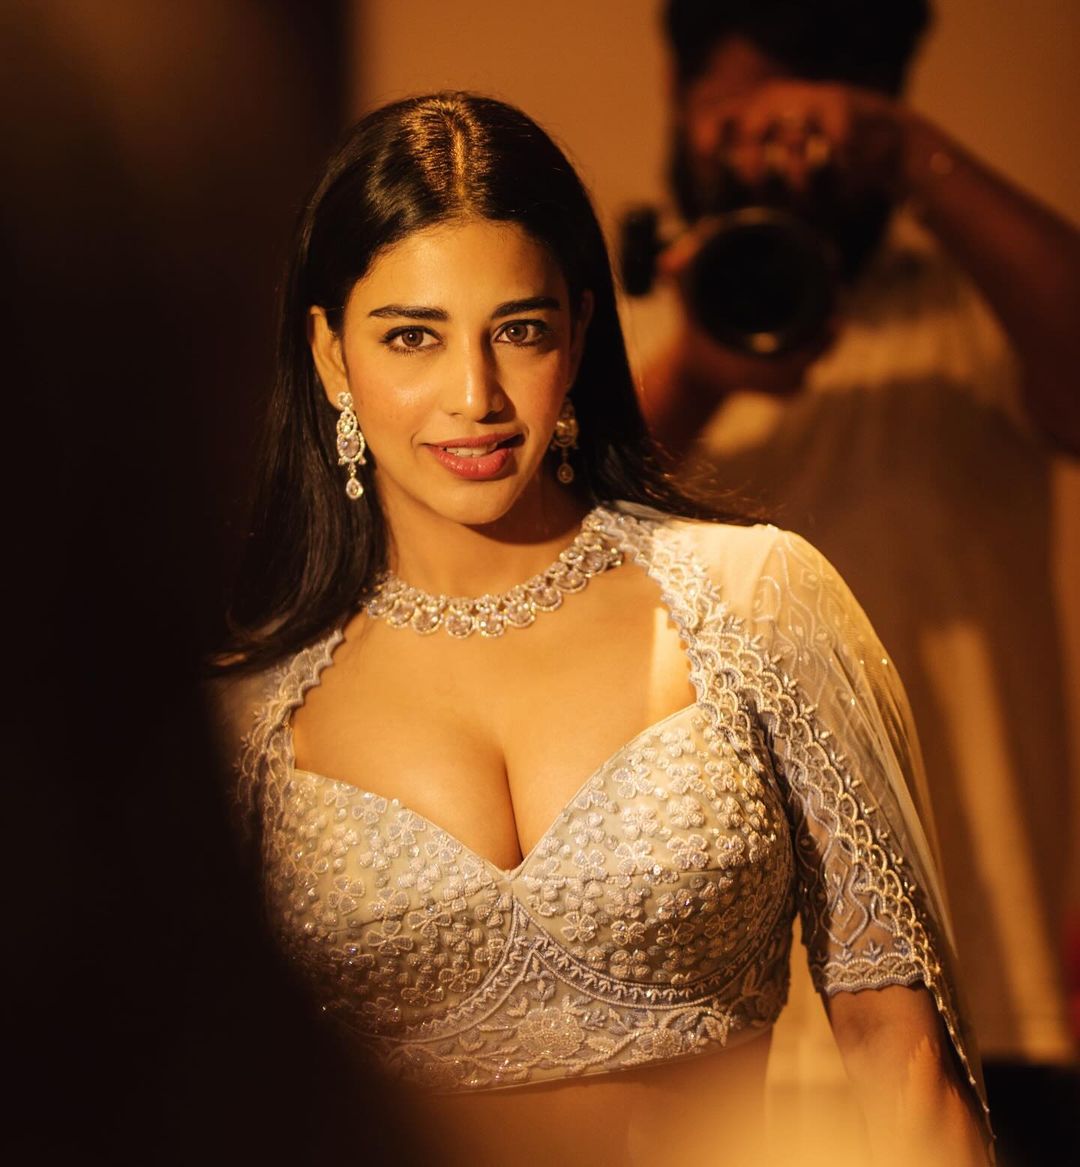 Glamorous #DakshaNagarkar stunning clicks raises the heat in this hot summer 🔥#Actresses #ActressLife #TeluguFilmIndustry #Telugu #4sidestvtelugu